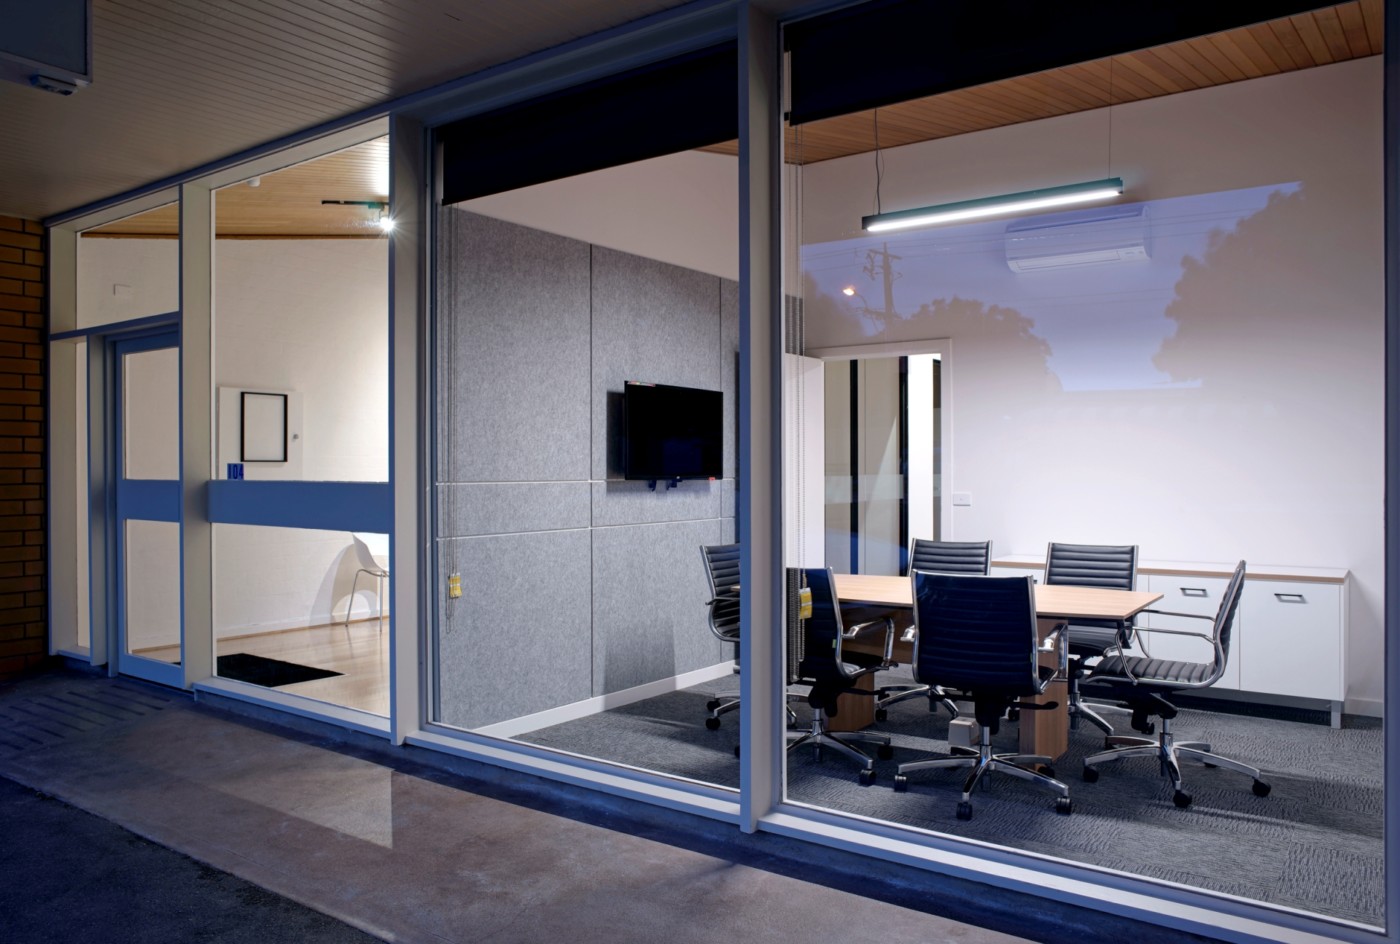 Office-Fitout-Refurbishment-Furniture-Boardroom-Table-Workstations-Carpet-tiles-reception-desk-partition-walls-ceiling-6